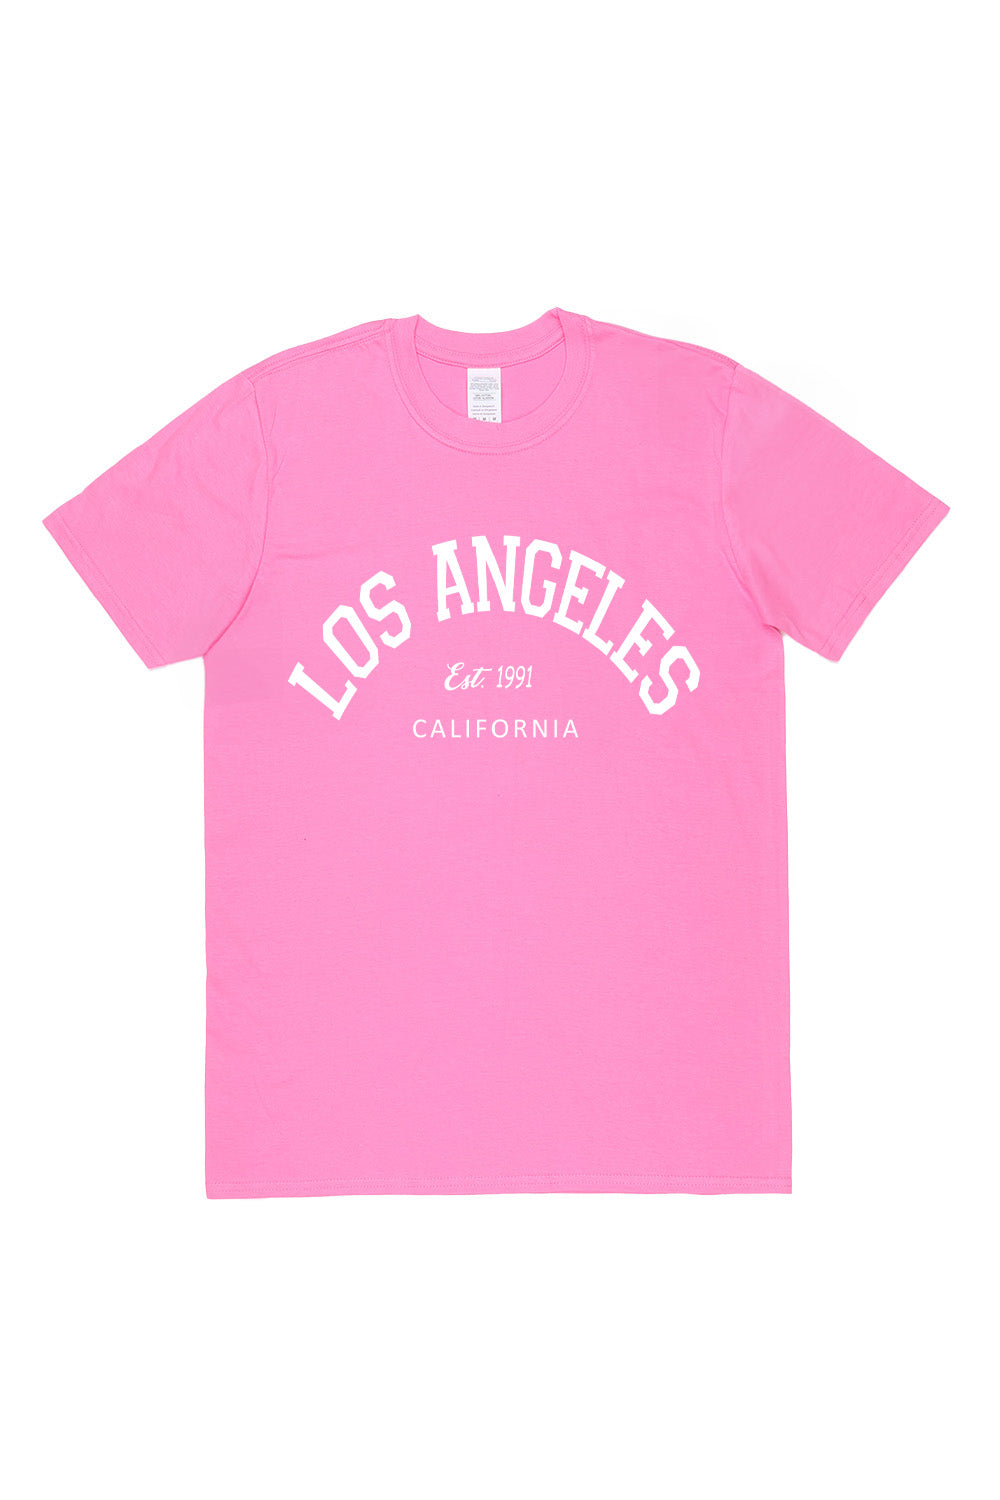 Los Angeles T-Shirt in Azalea (Custom Packs)